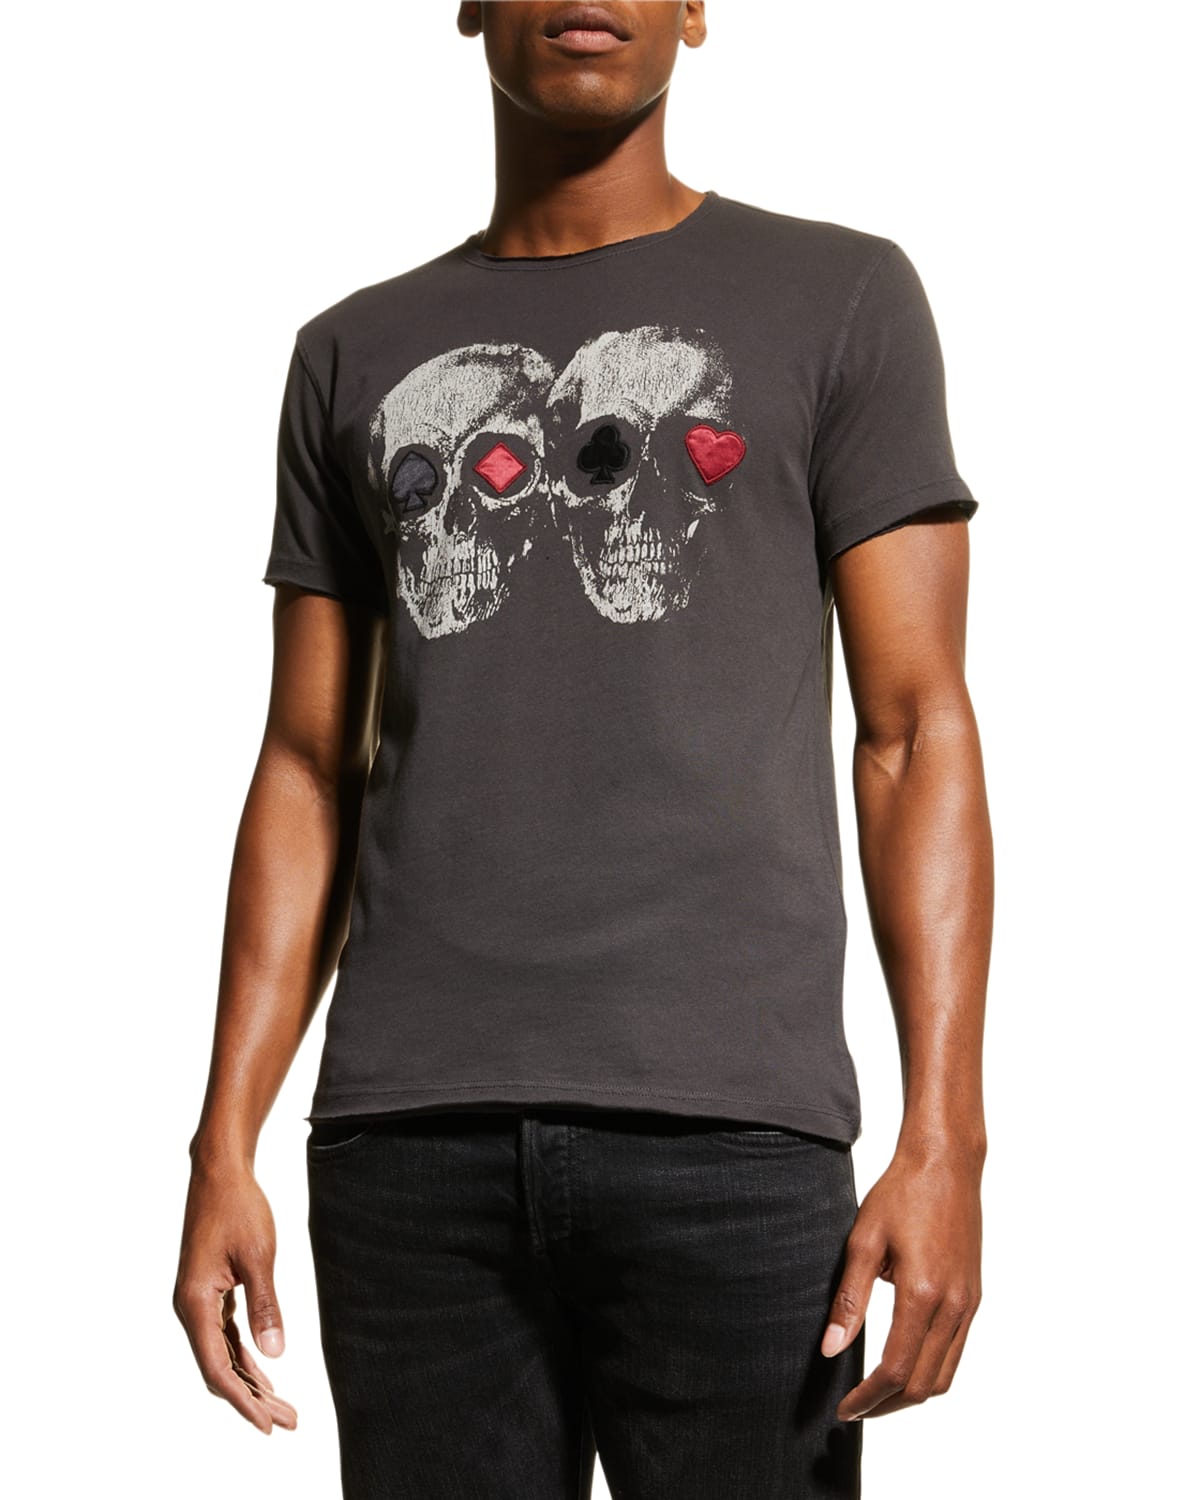 Men's Double Skull Graphic T-Shirt